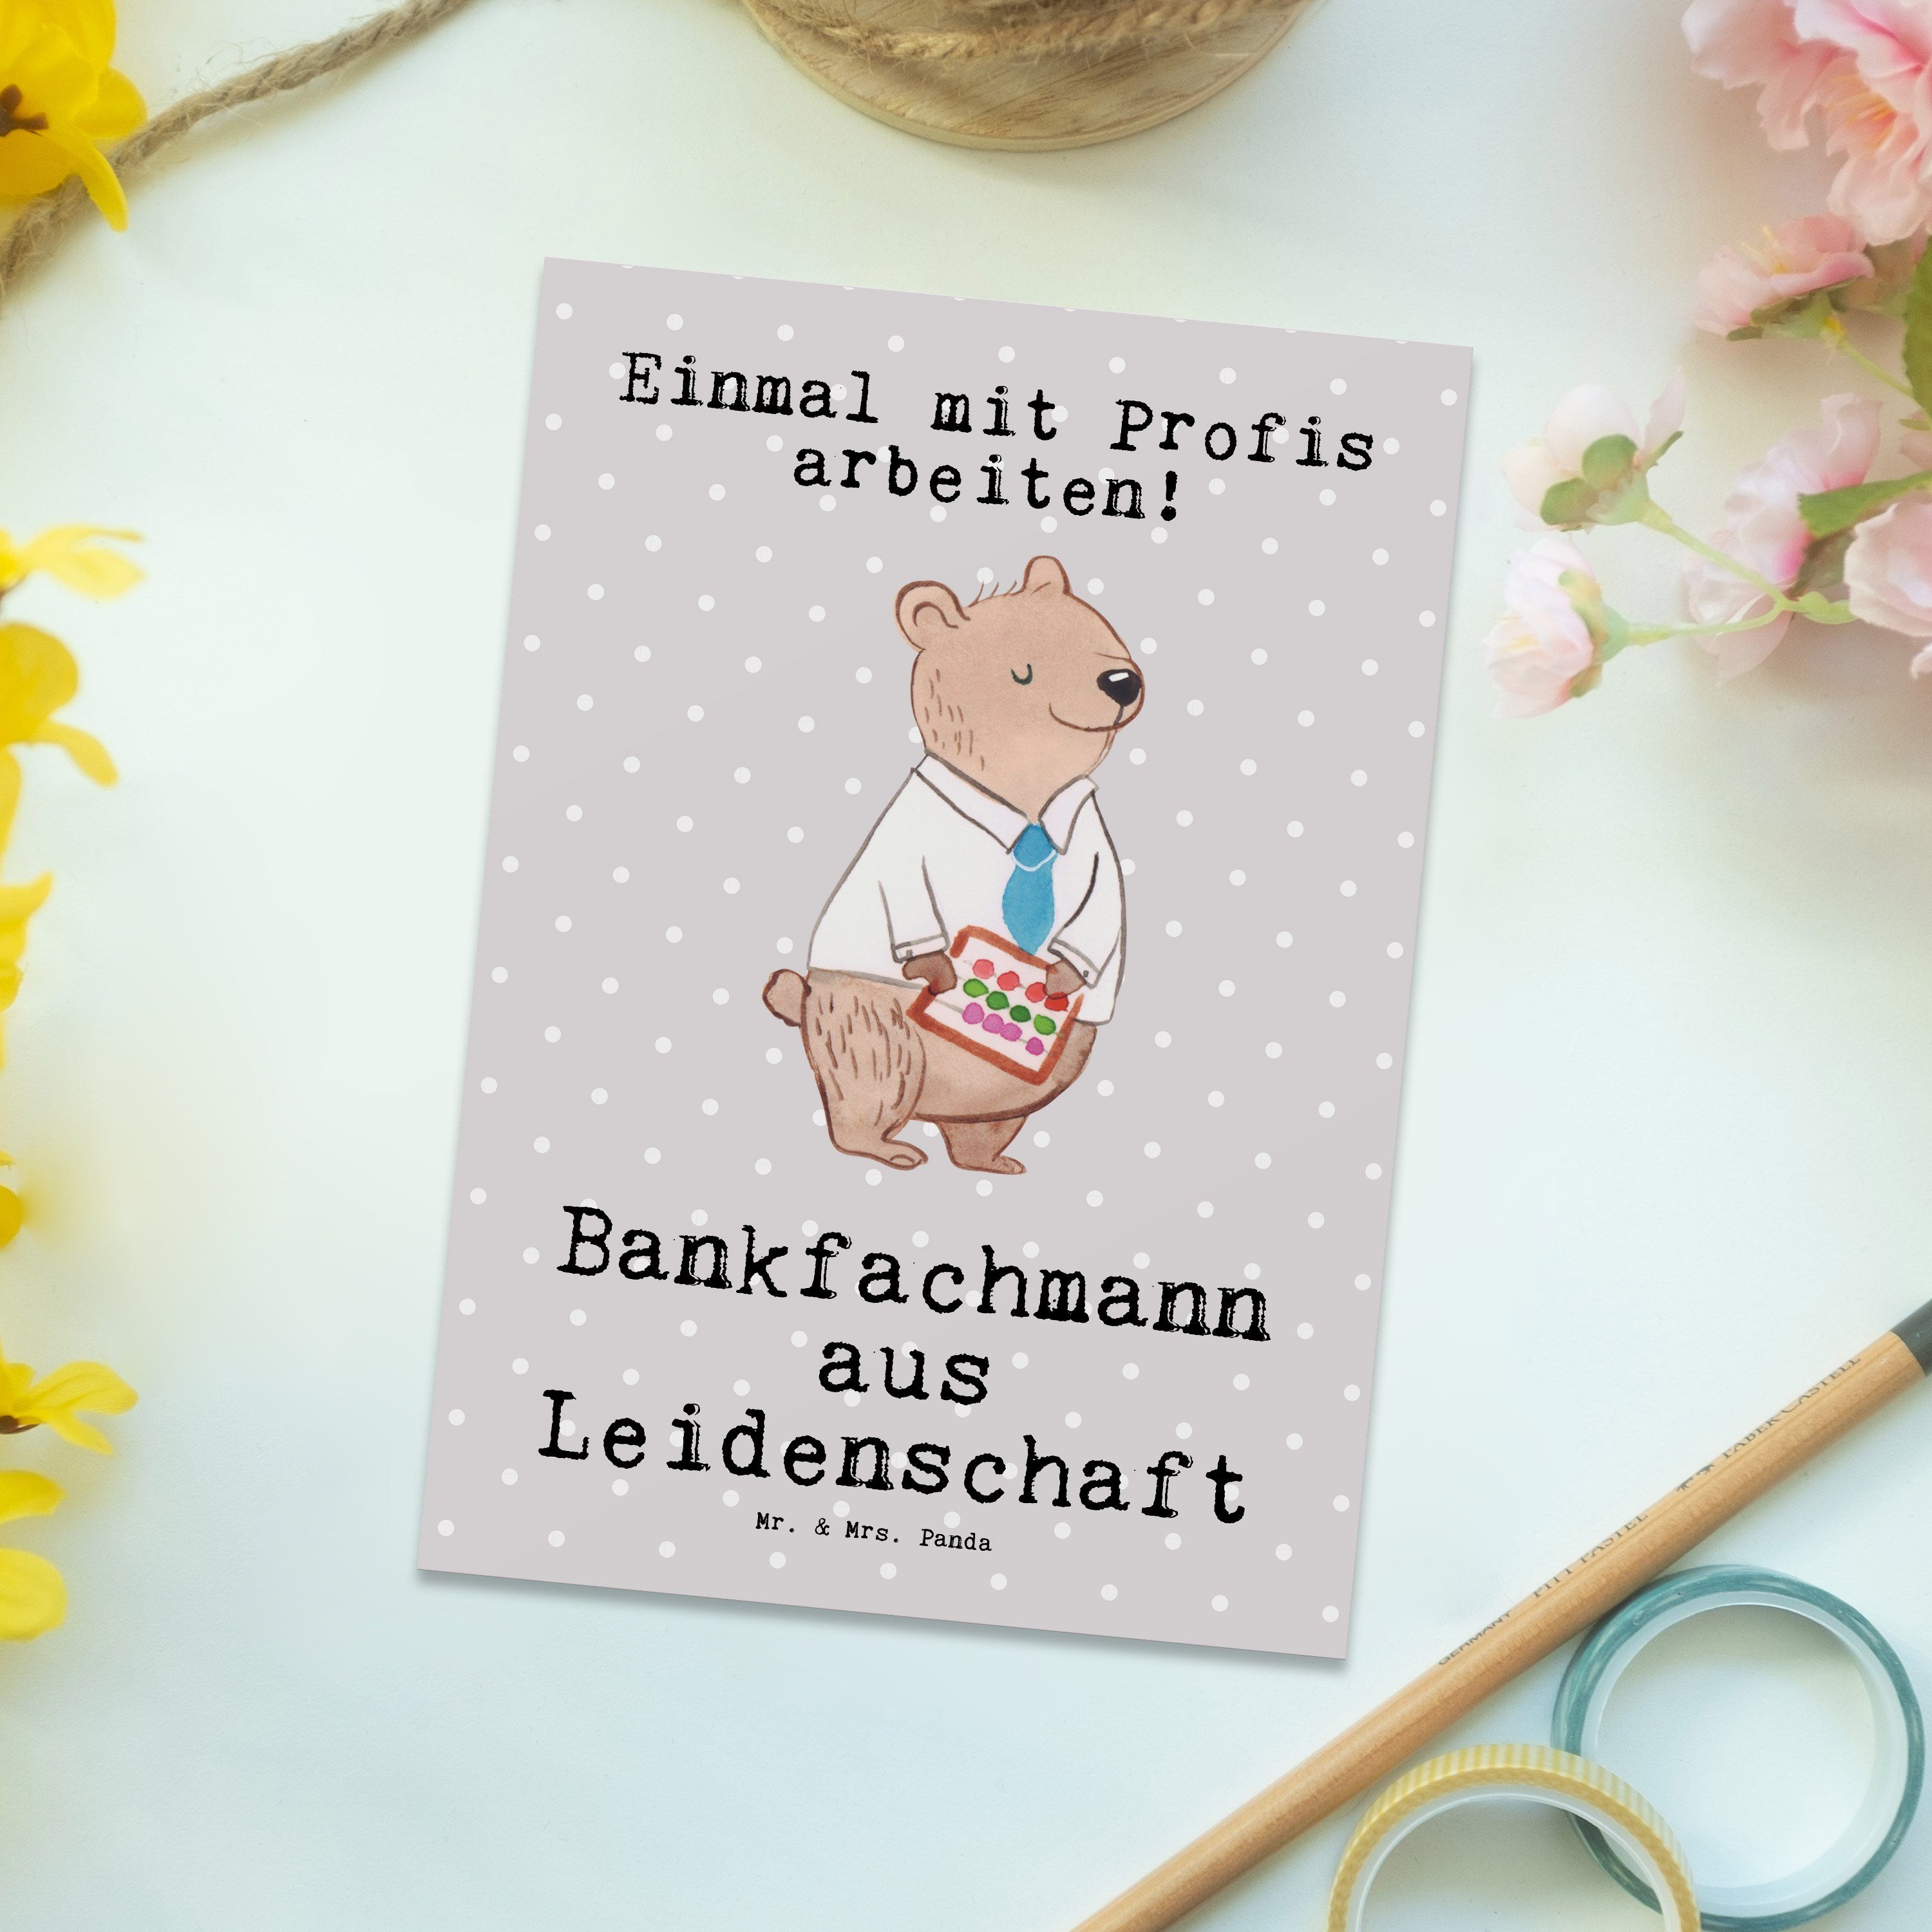 Mr. & Mrs. Panda Bankfachmann Leidenschaft Pastell Grau Postkarte Geschenk, Bankangestel - aus 